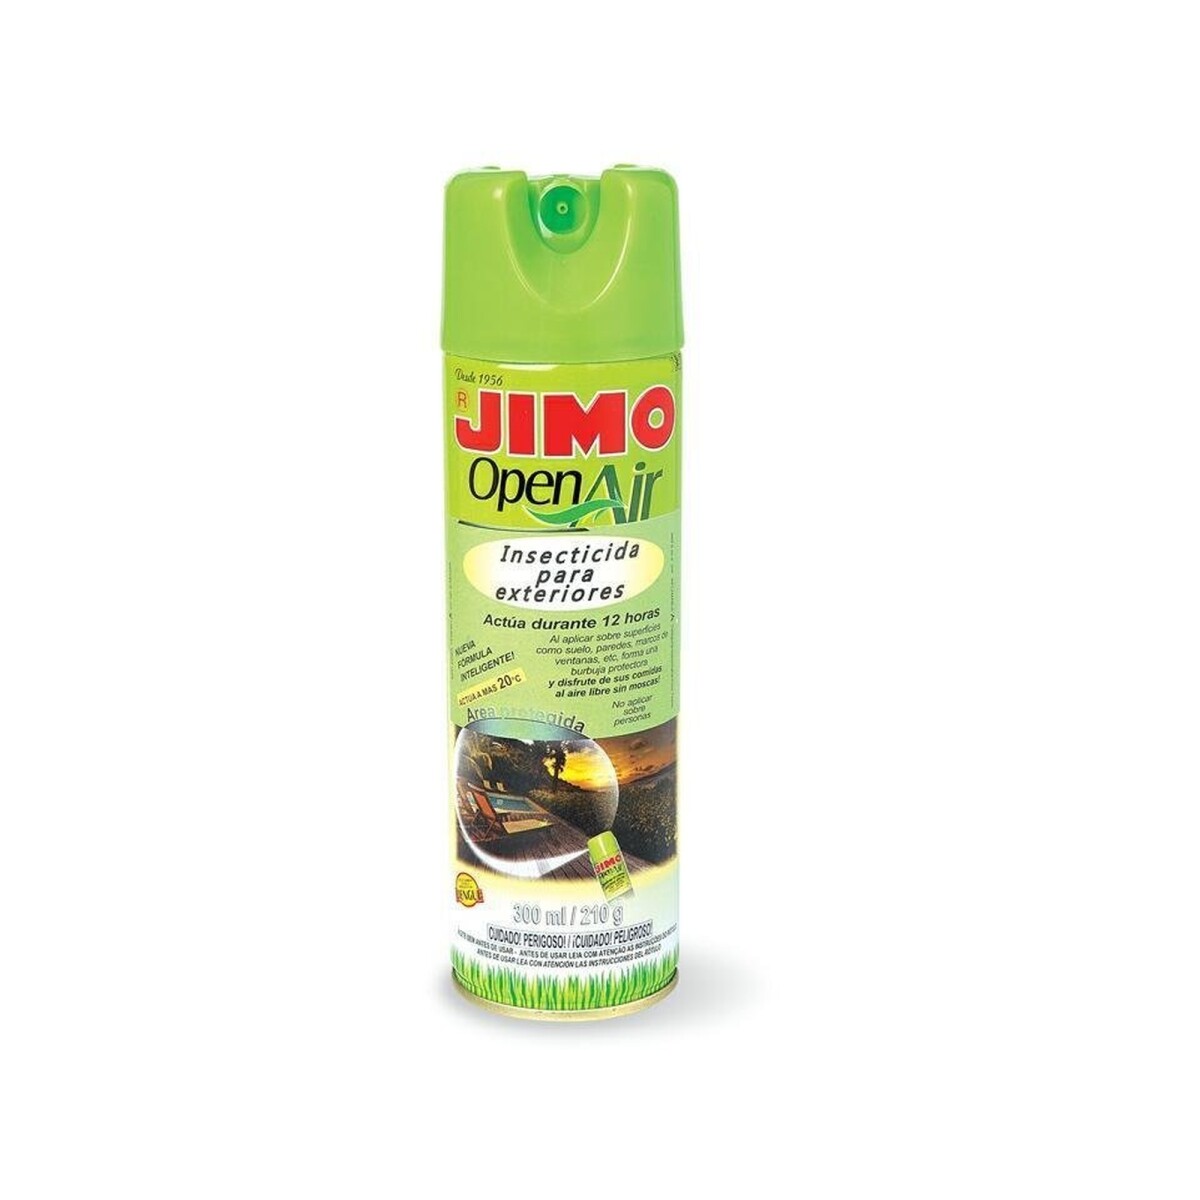 Jimo Open Air repelente aerosol 300ml 